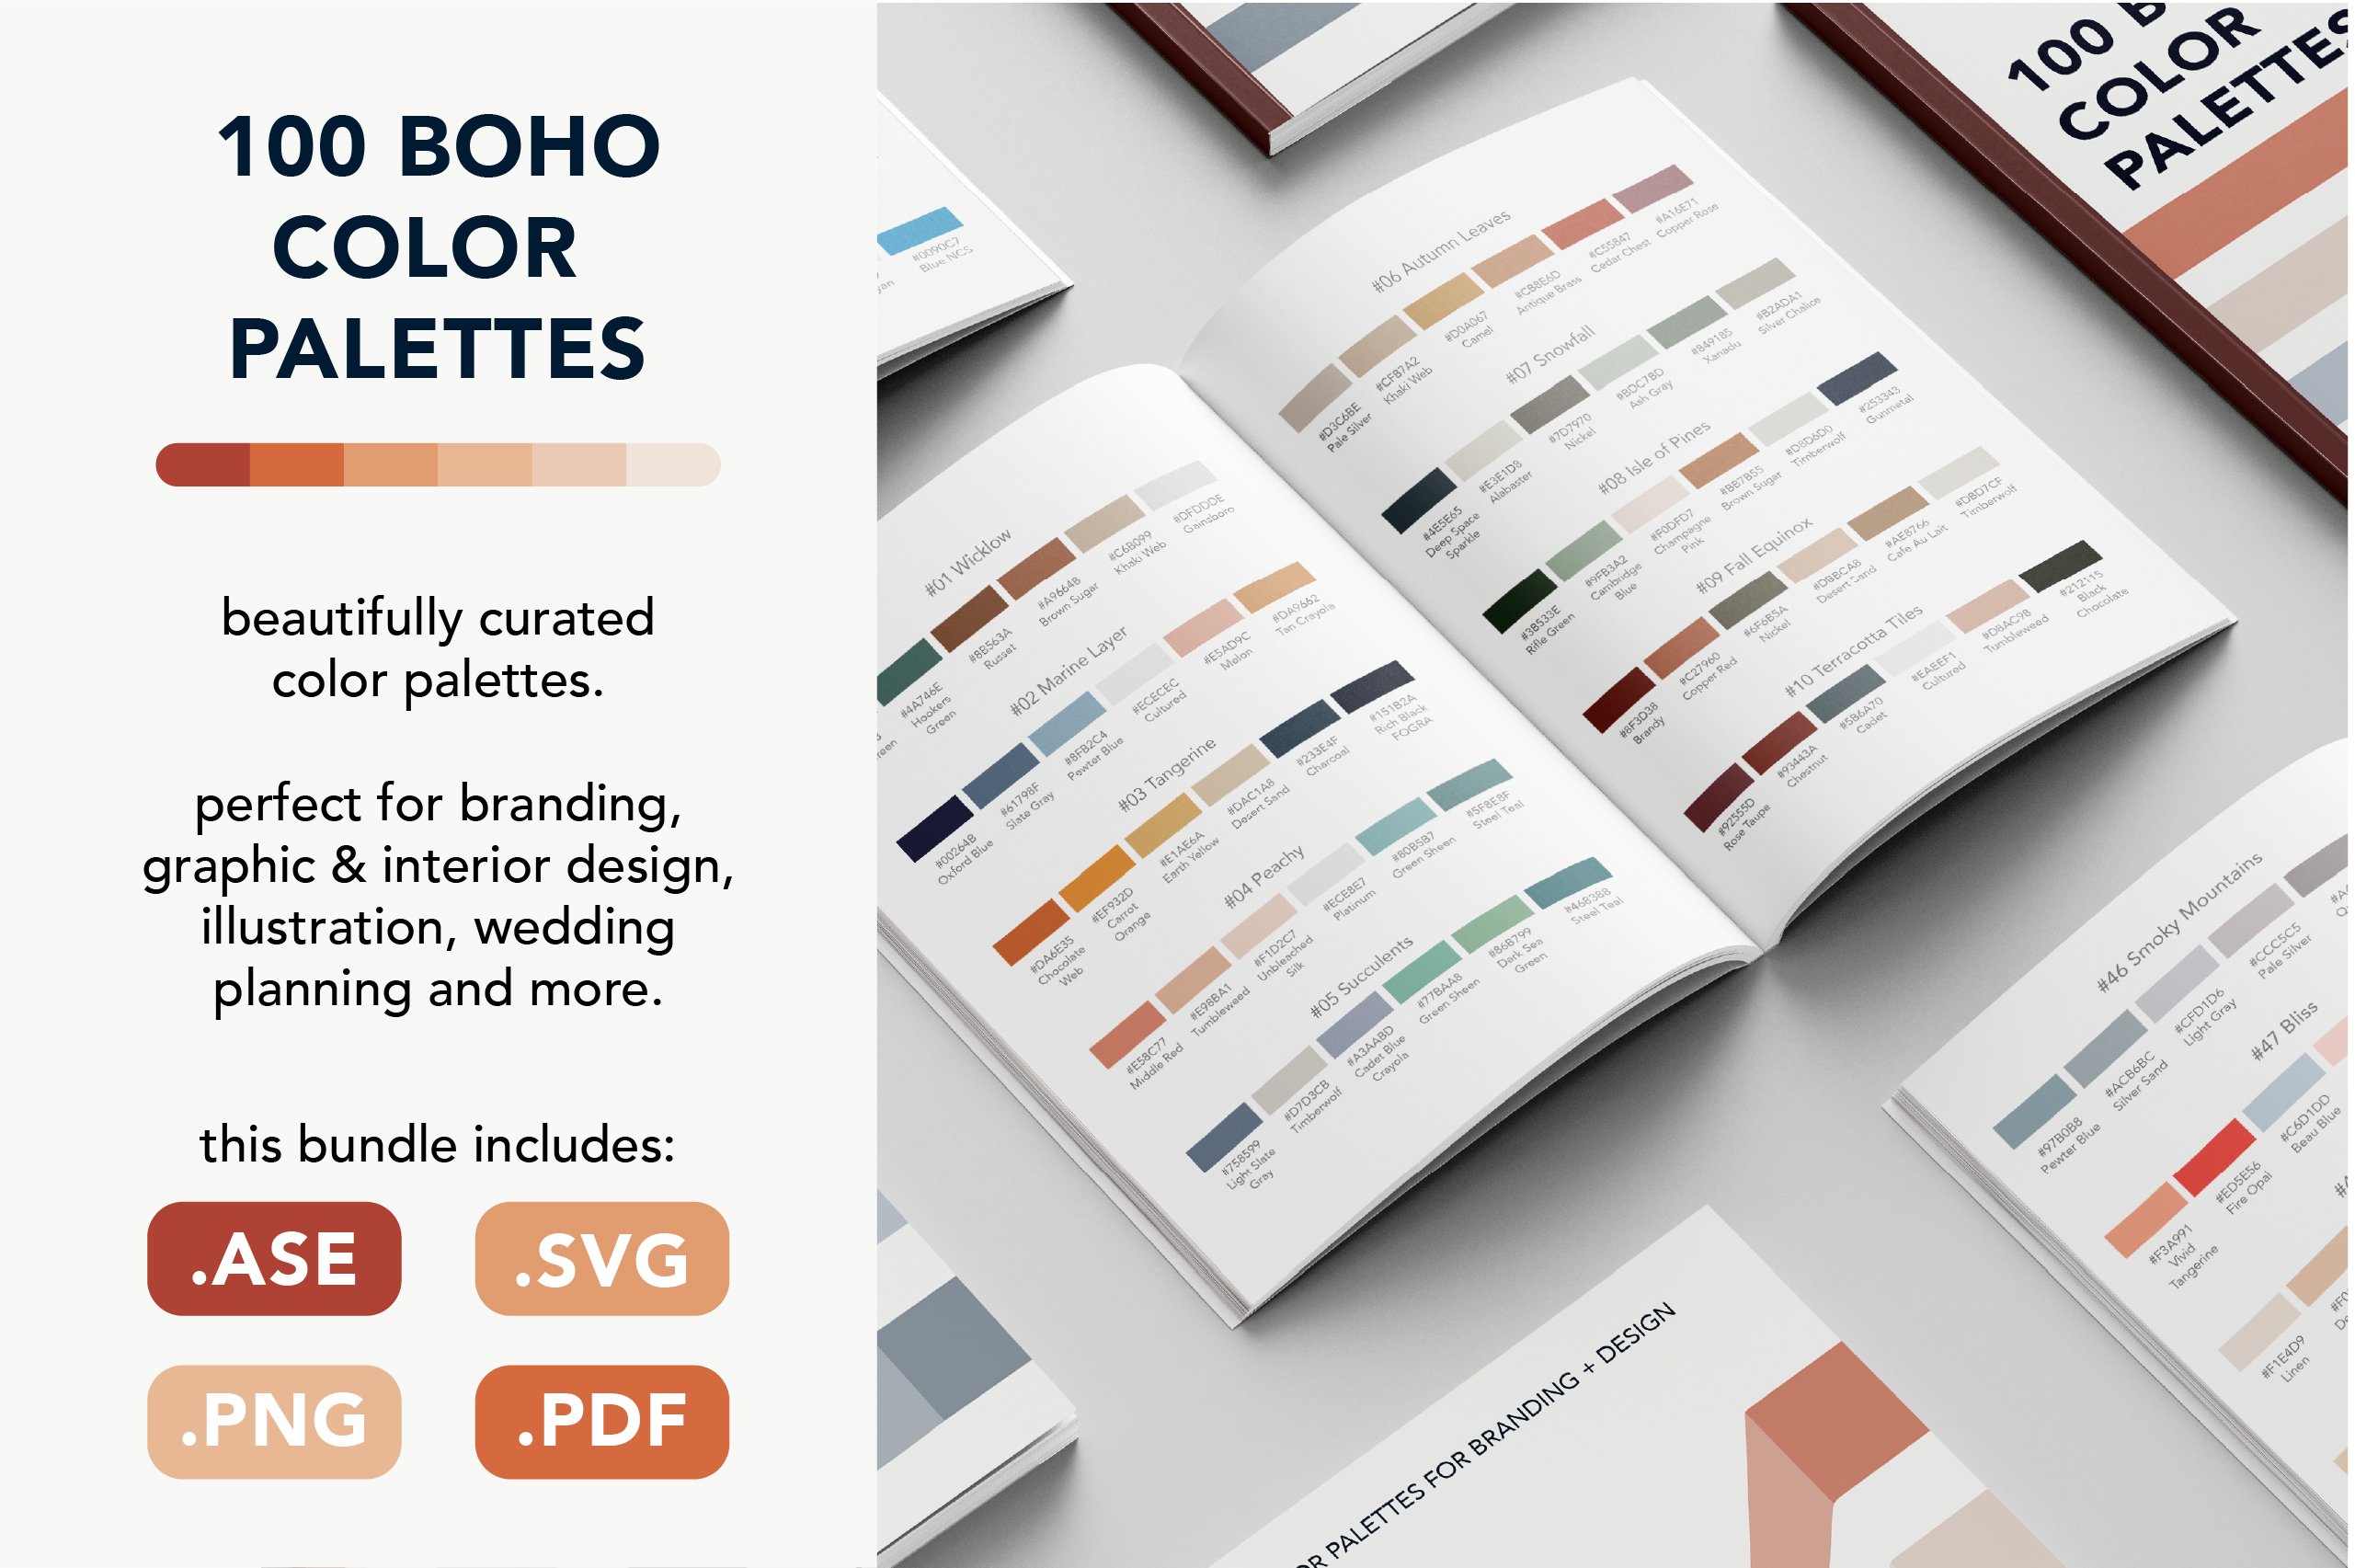 100 Boho Color Palettespreview image.